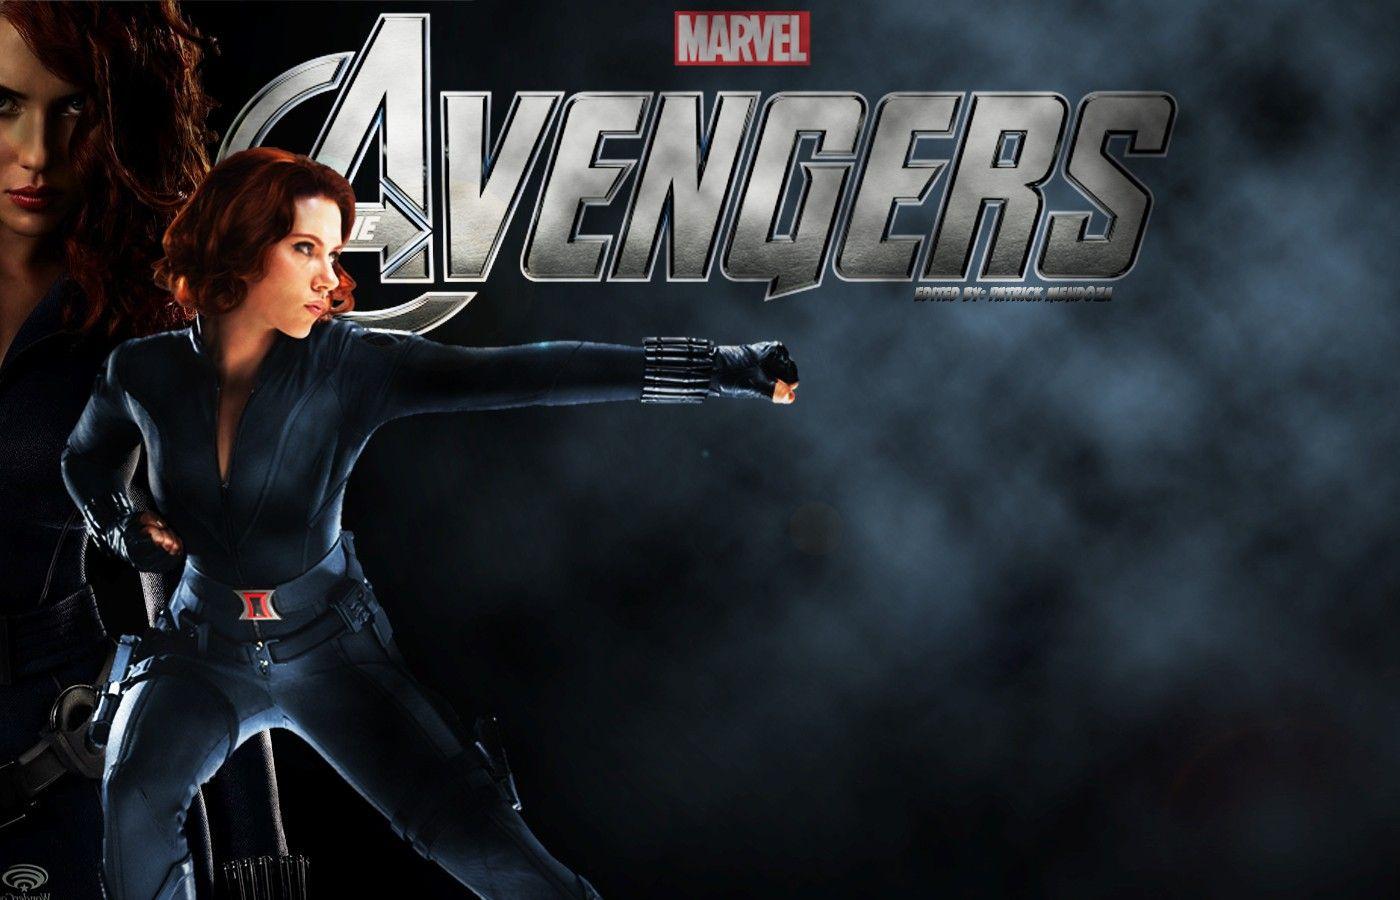 The Avengers Black Widow Wallpapers New the Best Black Widow